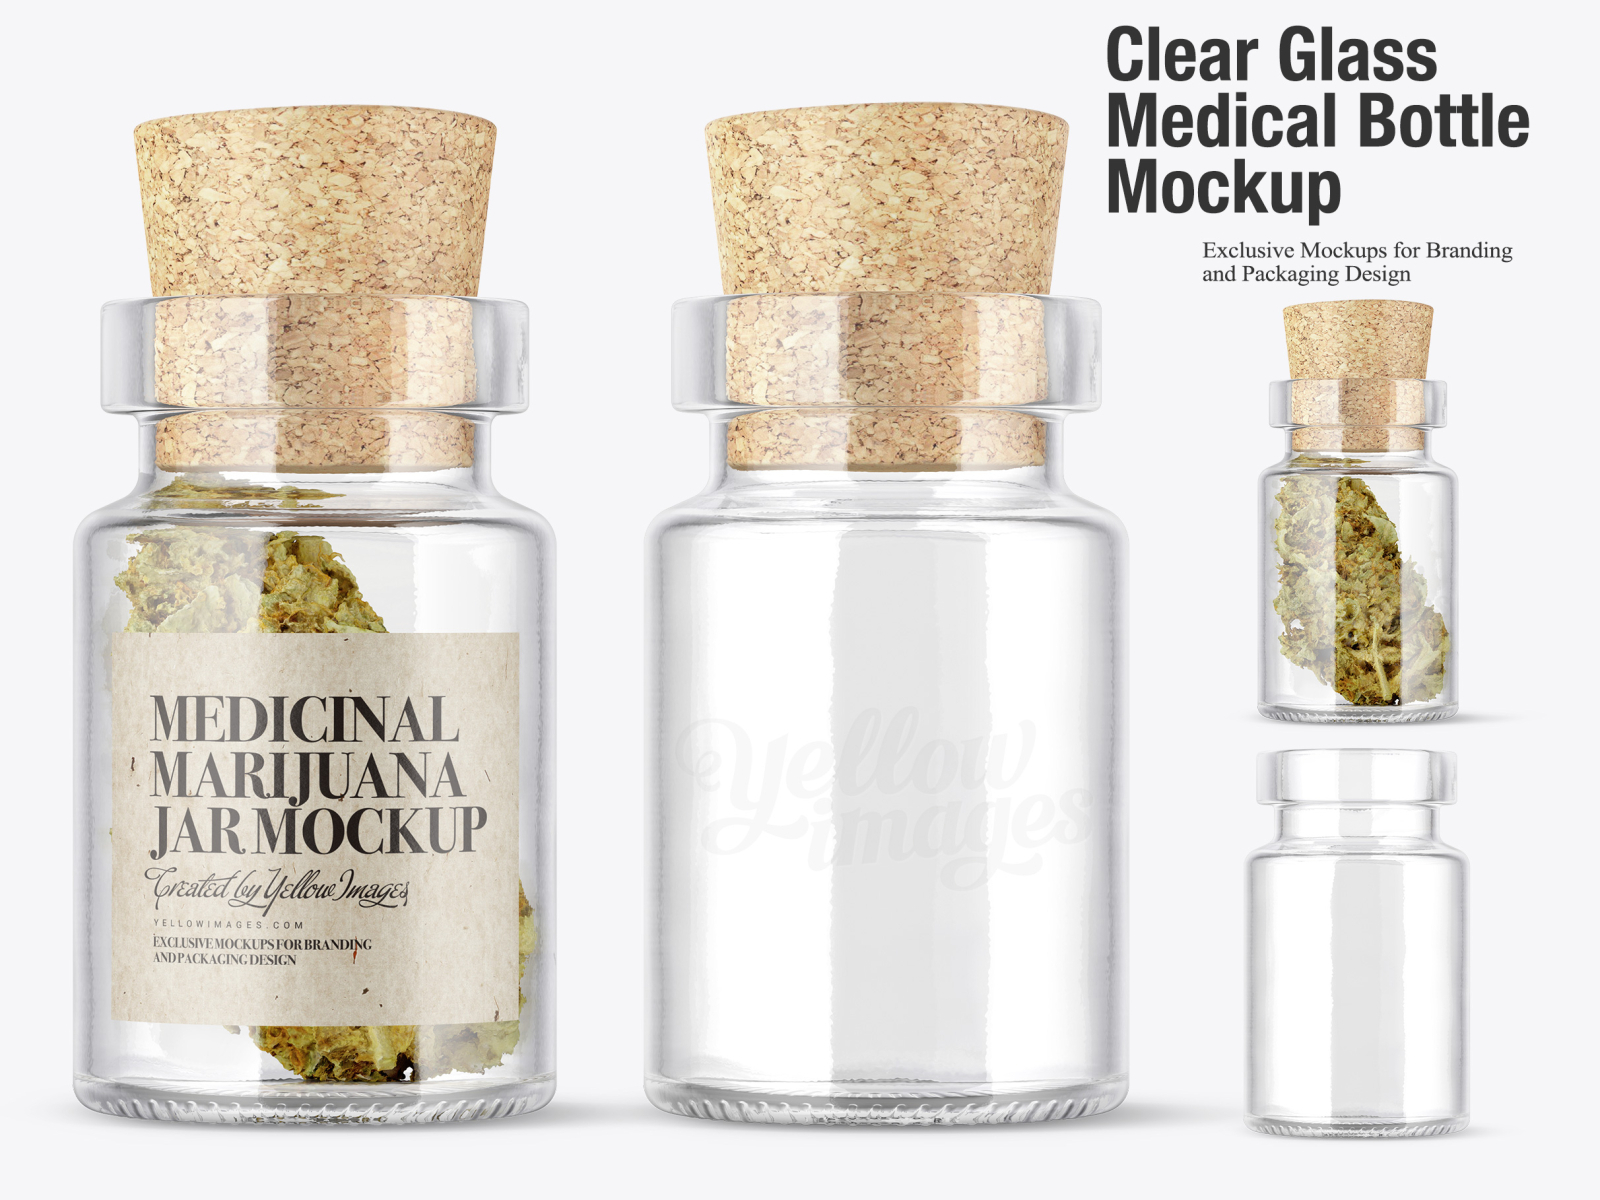 Download Clear Glass Medical Bottle Mockup By Oleksandr Hlubokyi On Dribbble PSD Mockup Templates